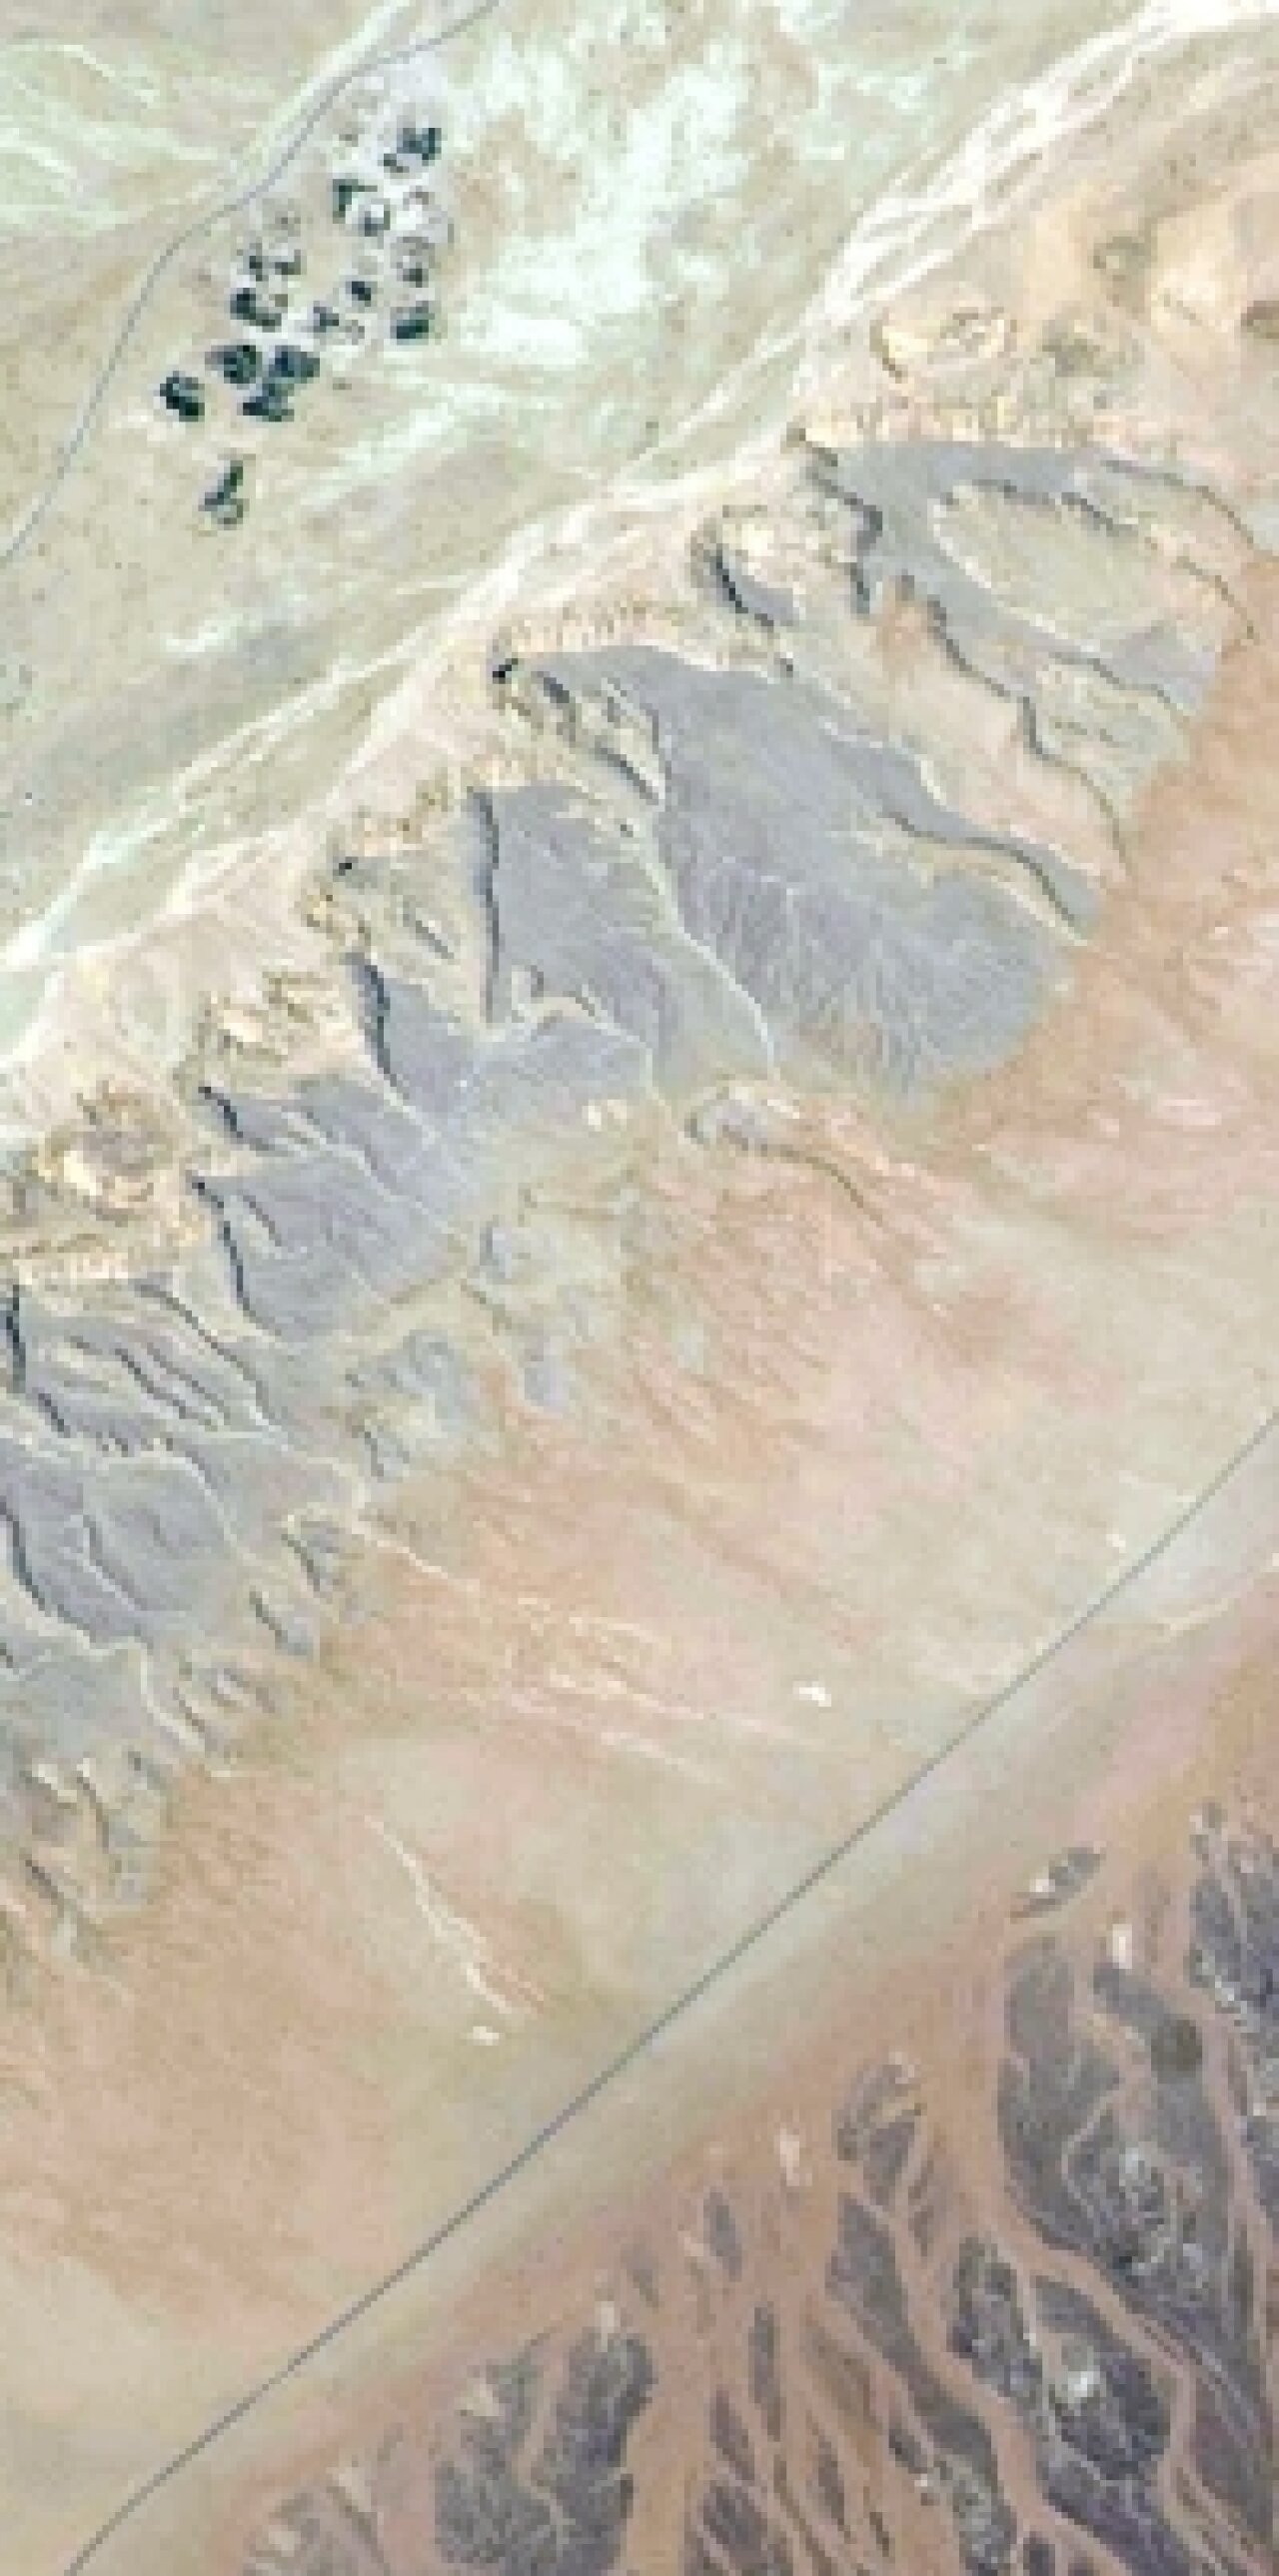 Satellite image from mining landscape.